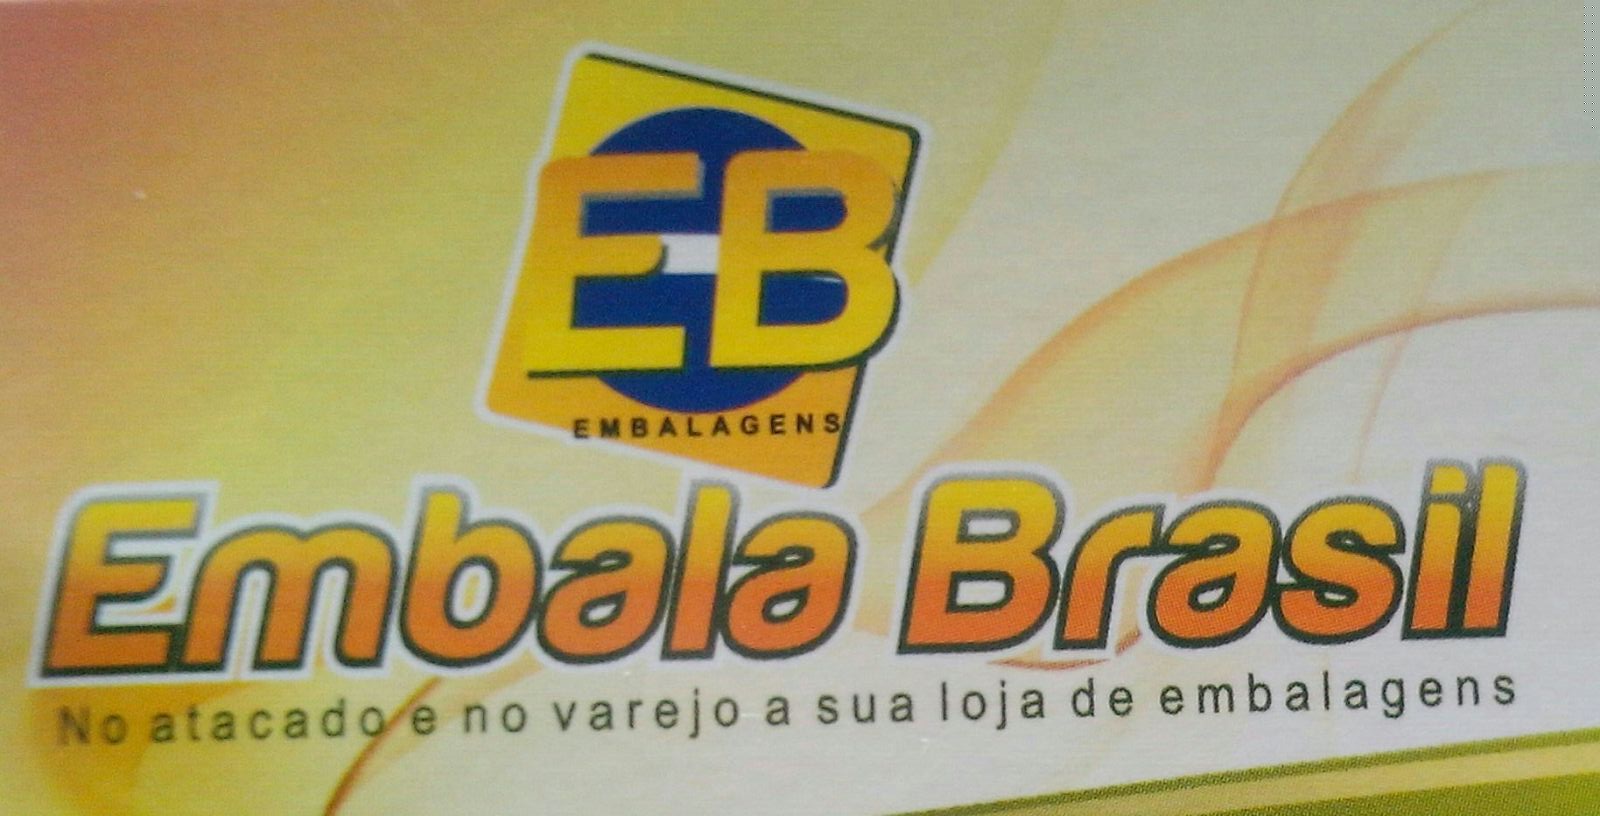 EMBALA BRASIL EMBALAGENS - Aracaju, SE